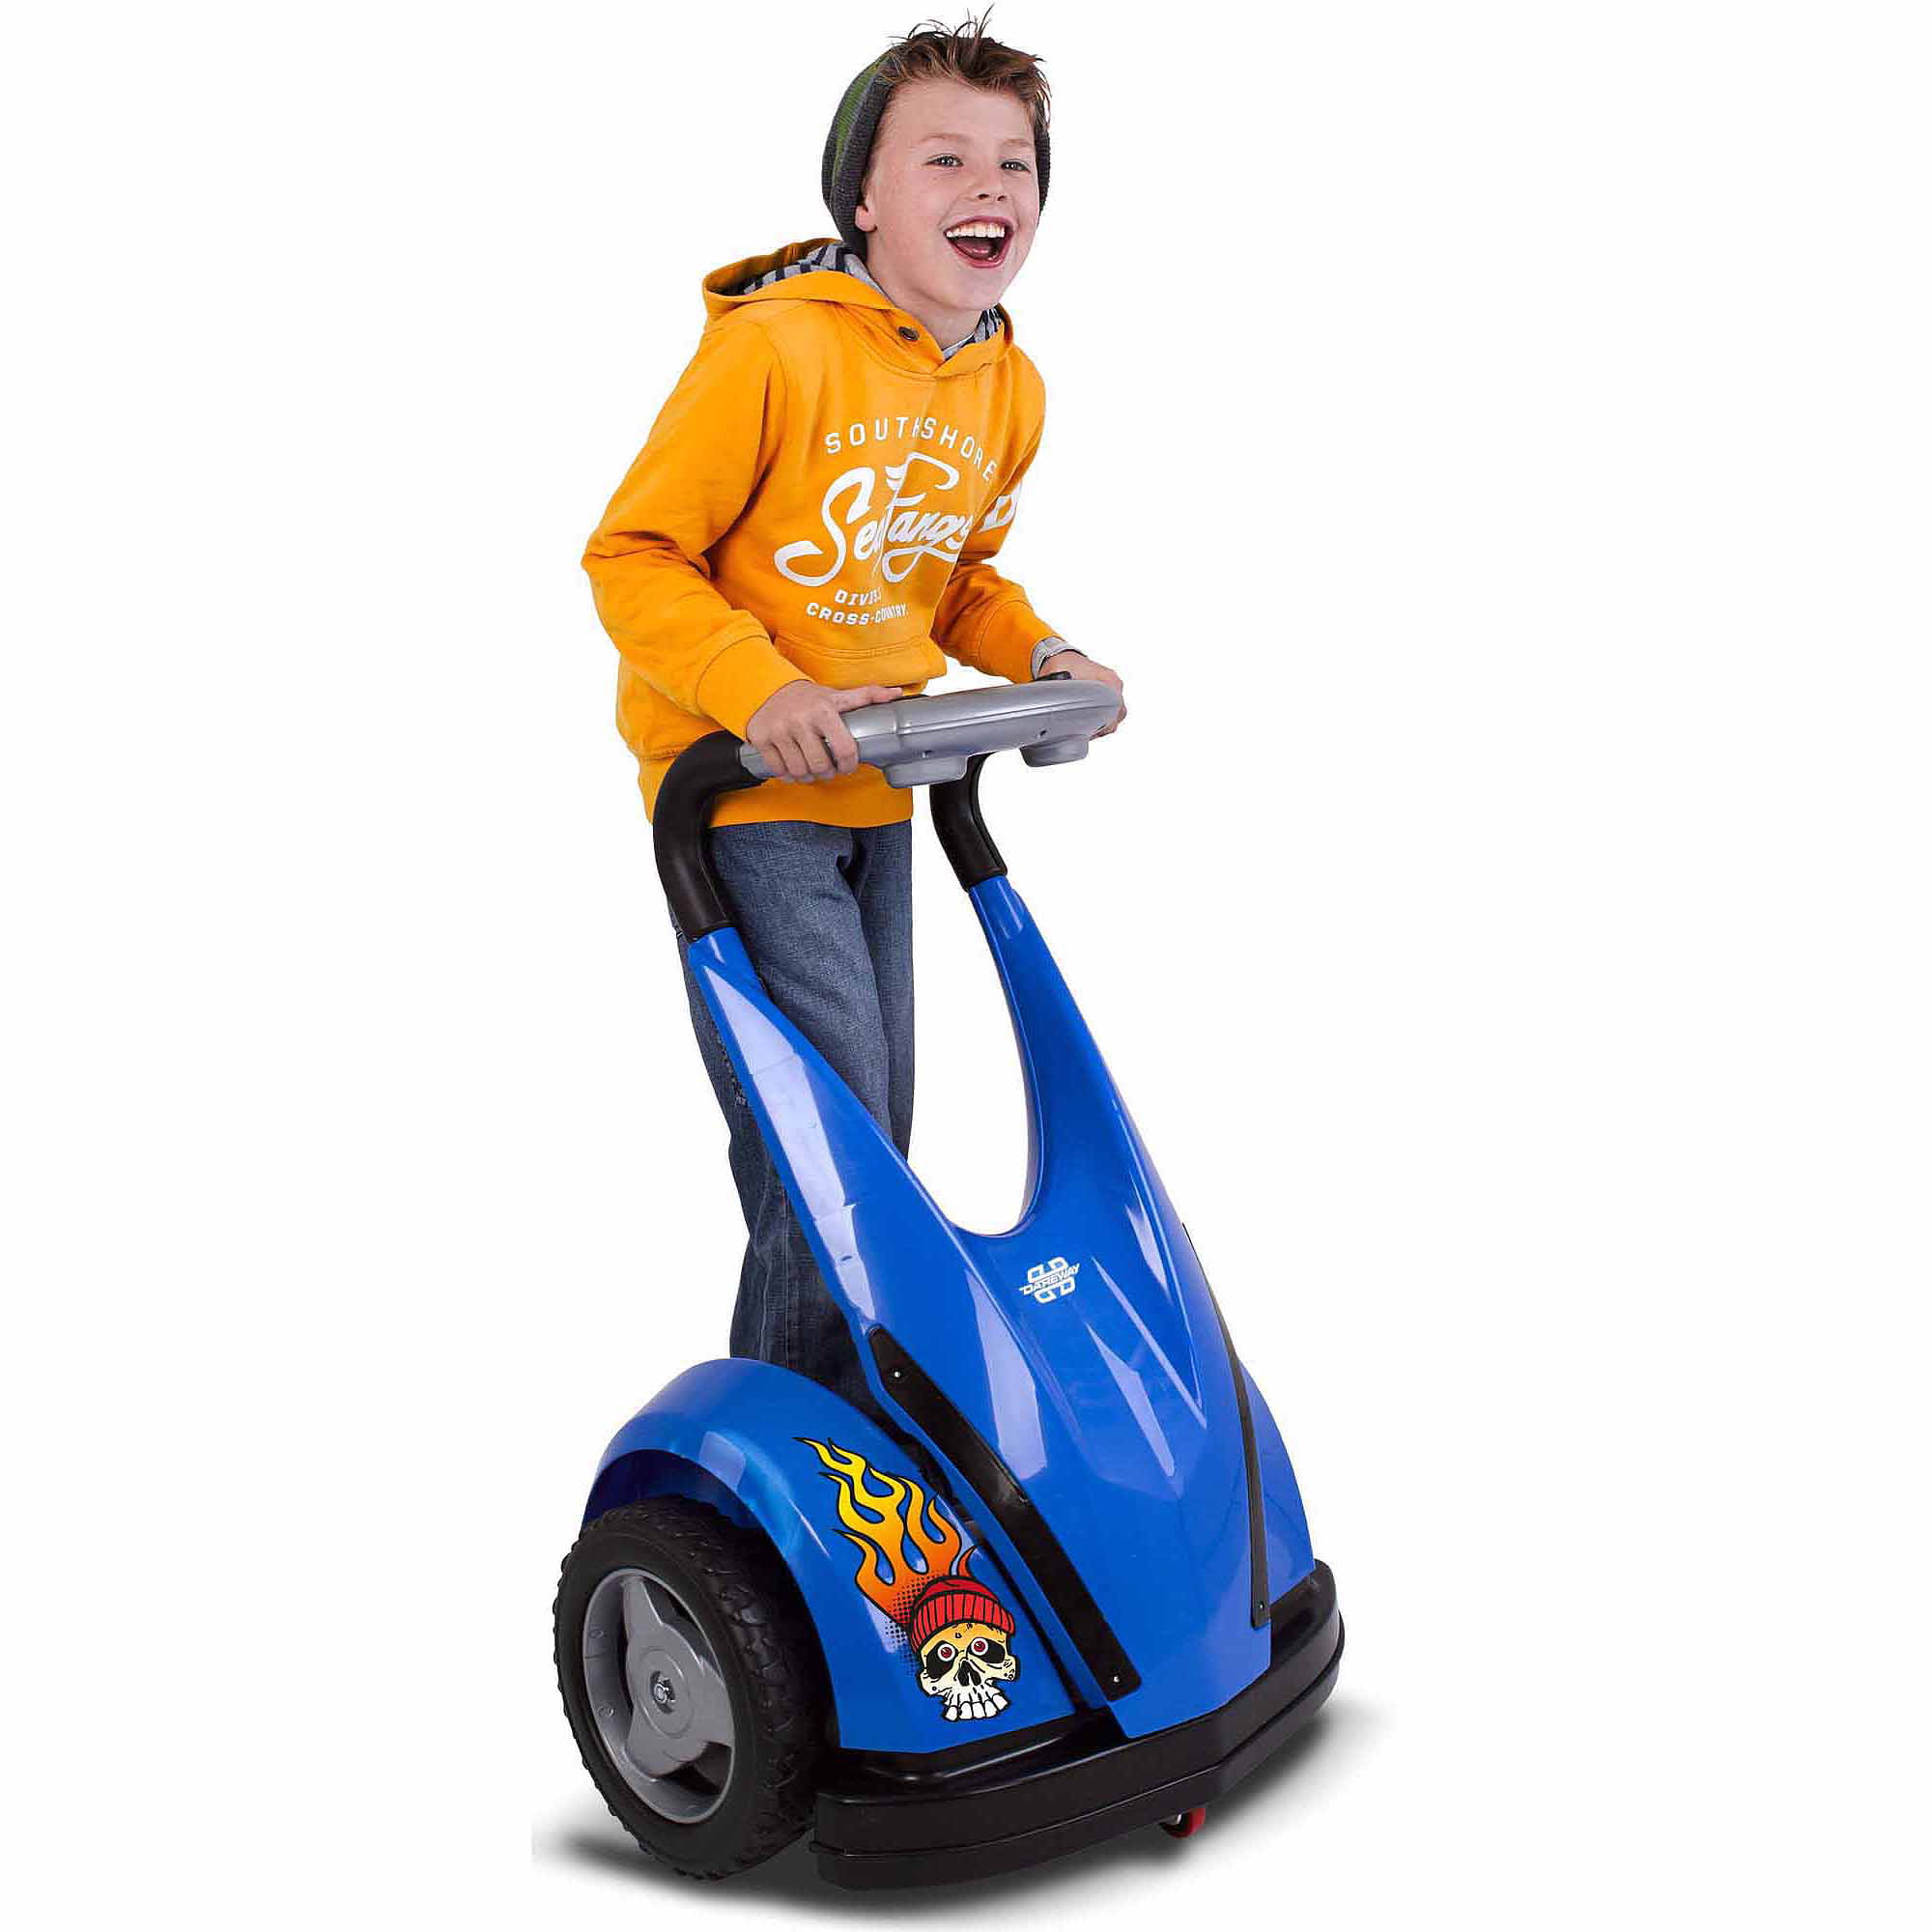 Скутер детей лет. Скутер сигвей Feber Dareway. Скутер для детей. Скутер для детей 10 лет. Детский скутер на аккумуляторе.